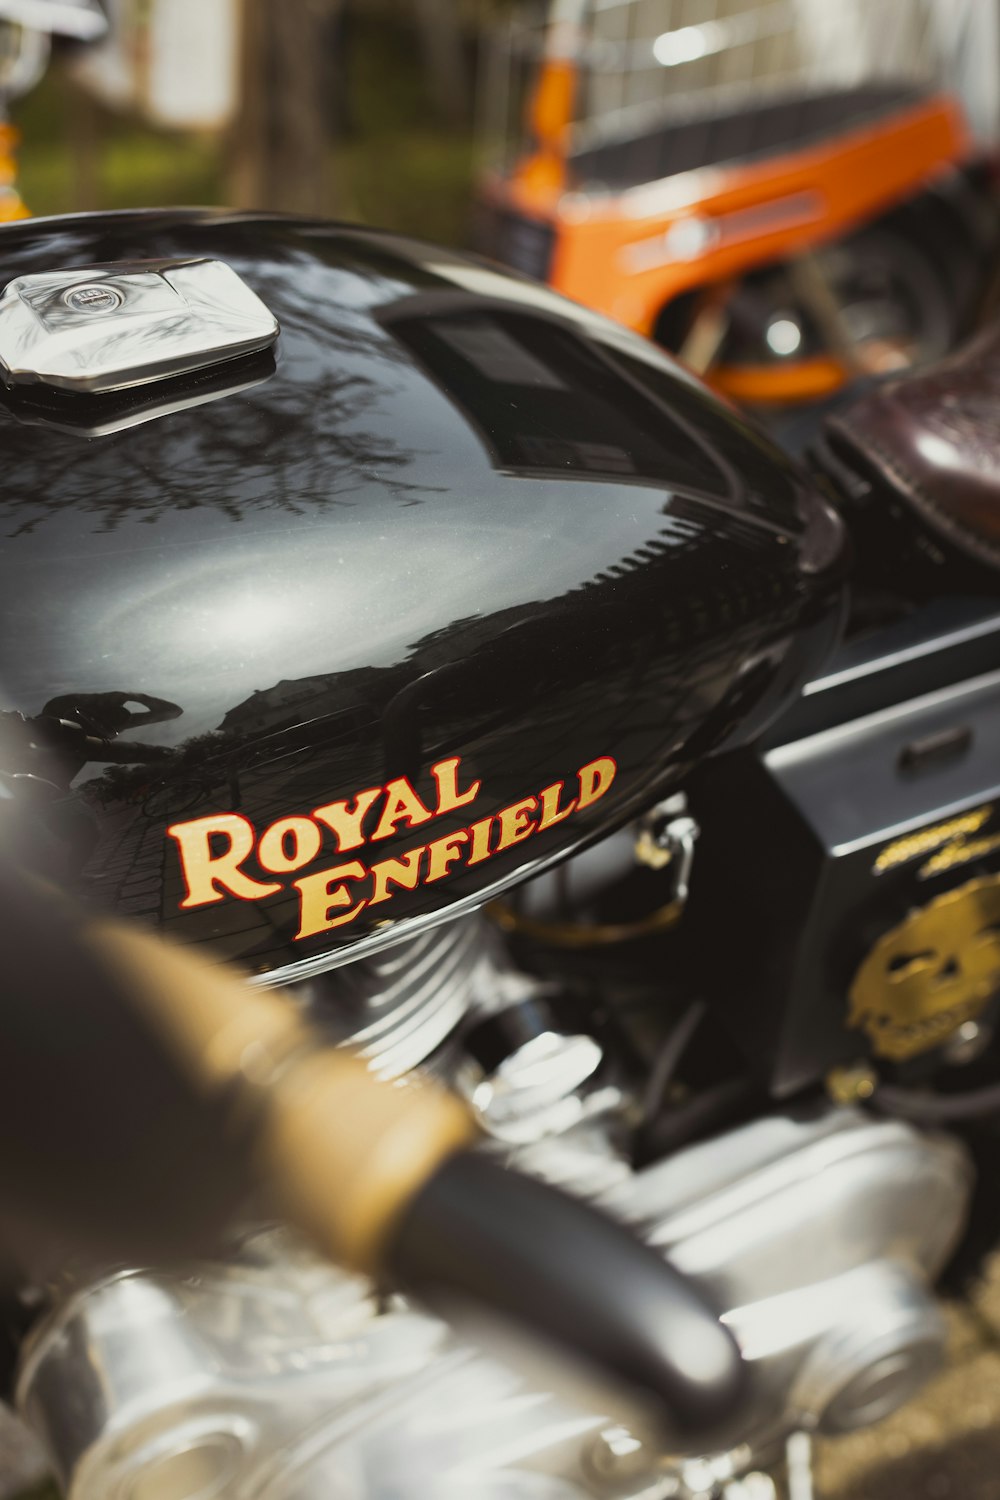 a close up of a royal enfield motorcycle